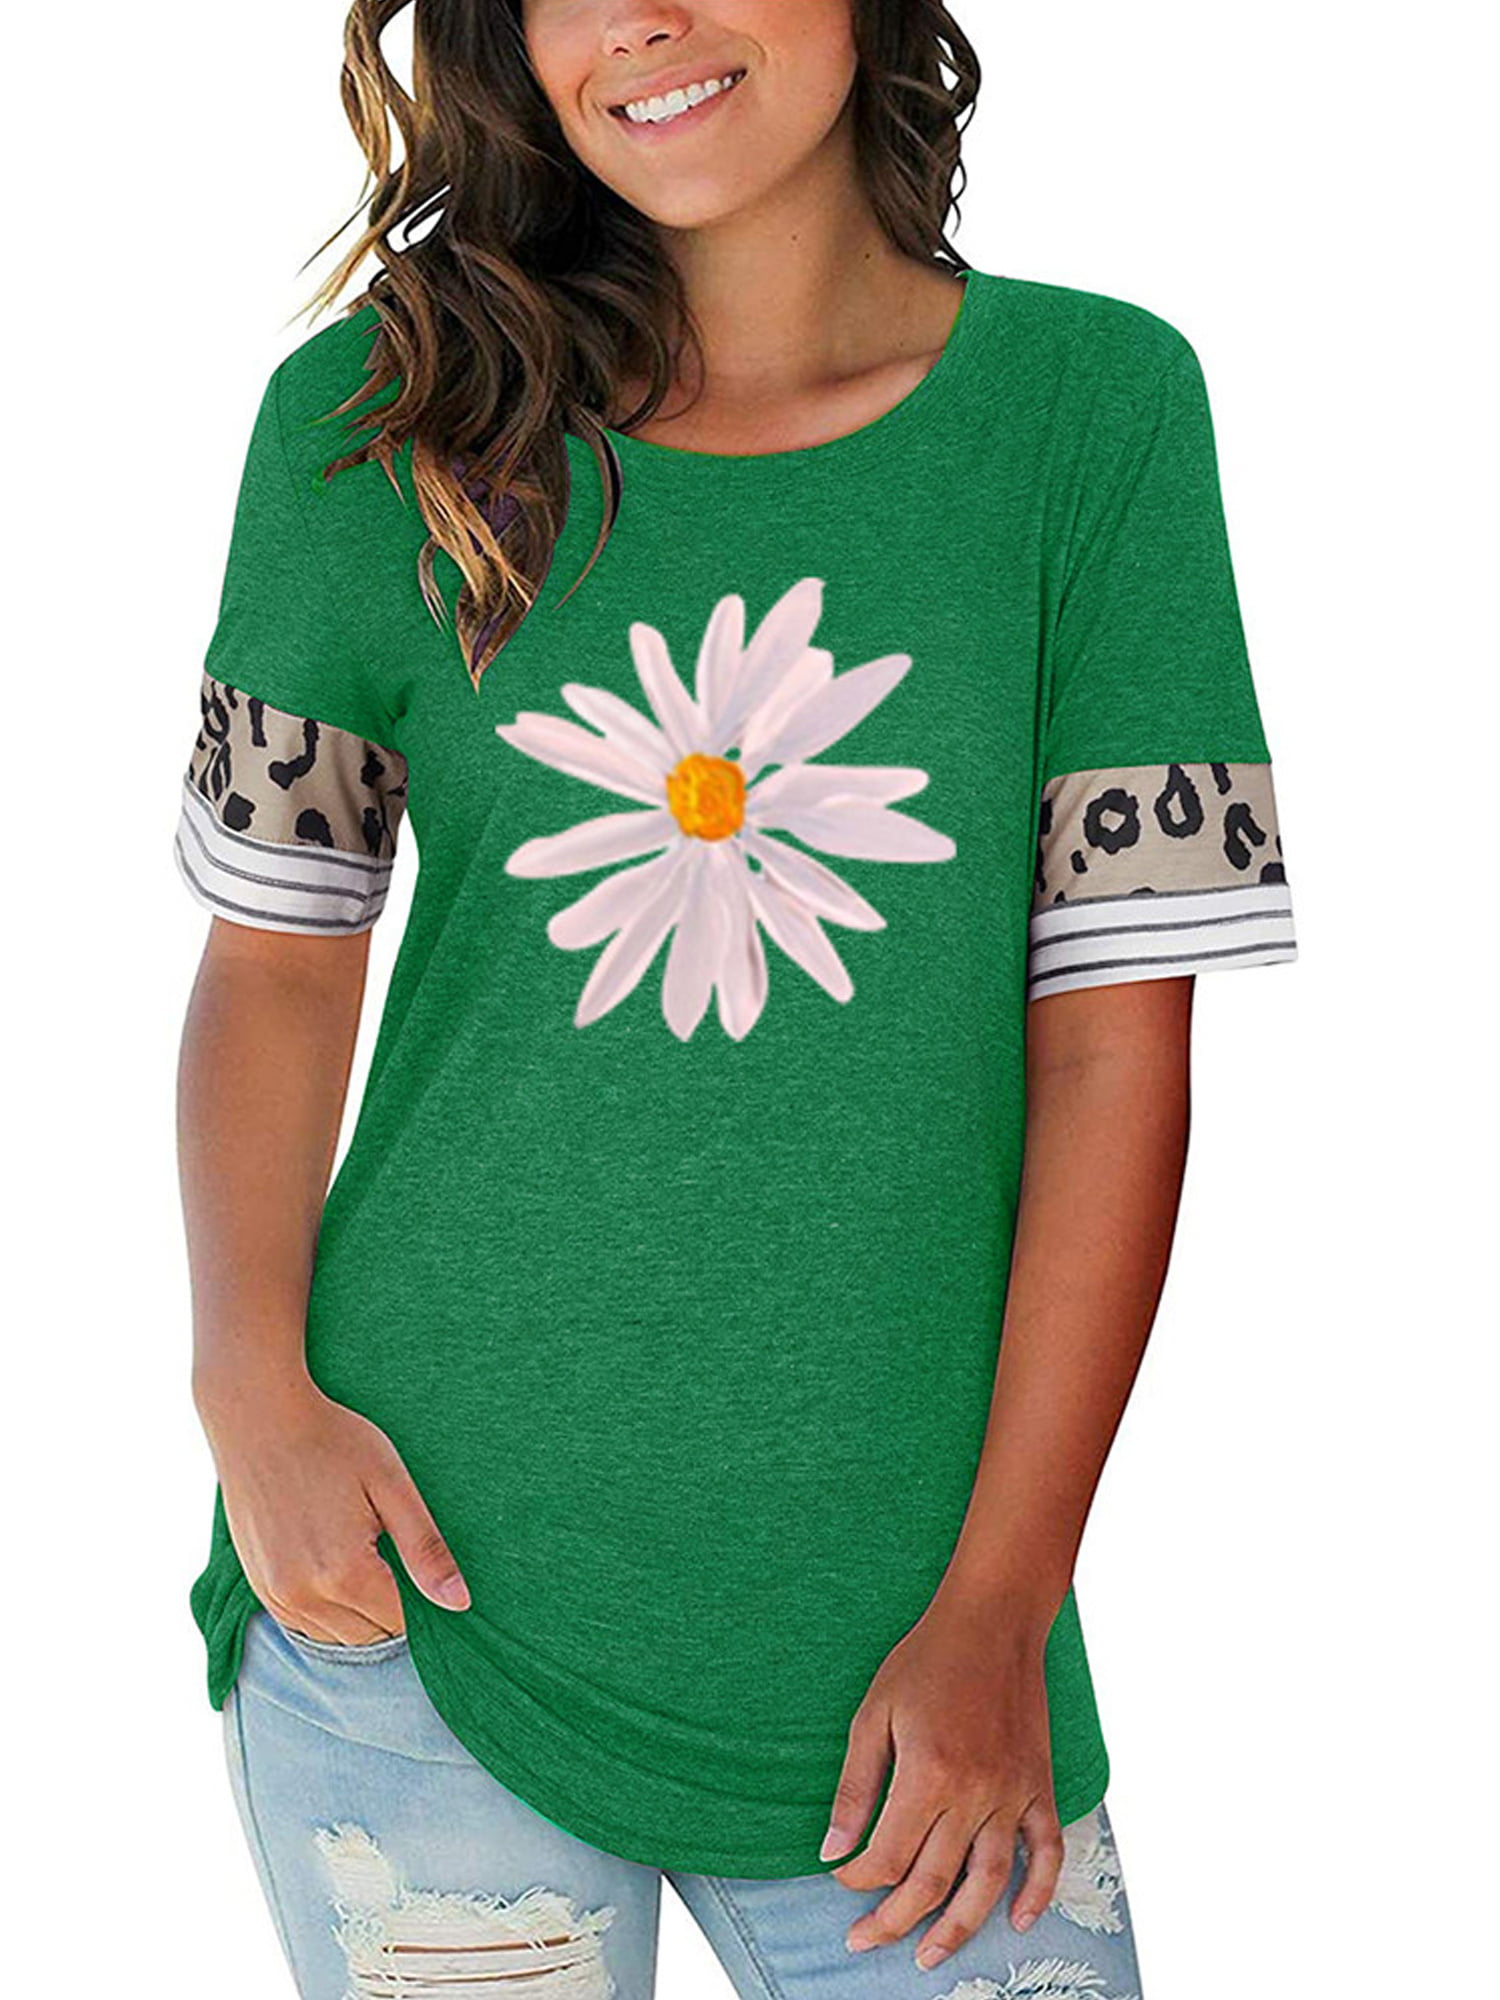 Eleluny Women's Daisy Print T-Shirt Crew Neck Tops Loose Casual Tee ...